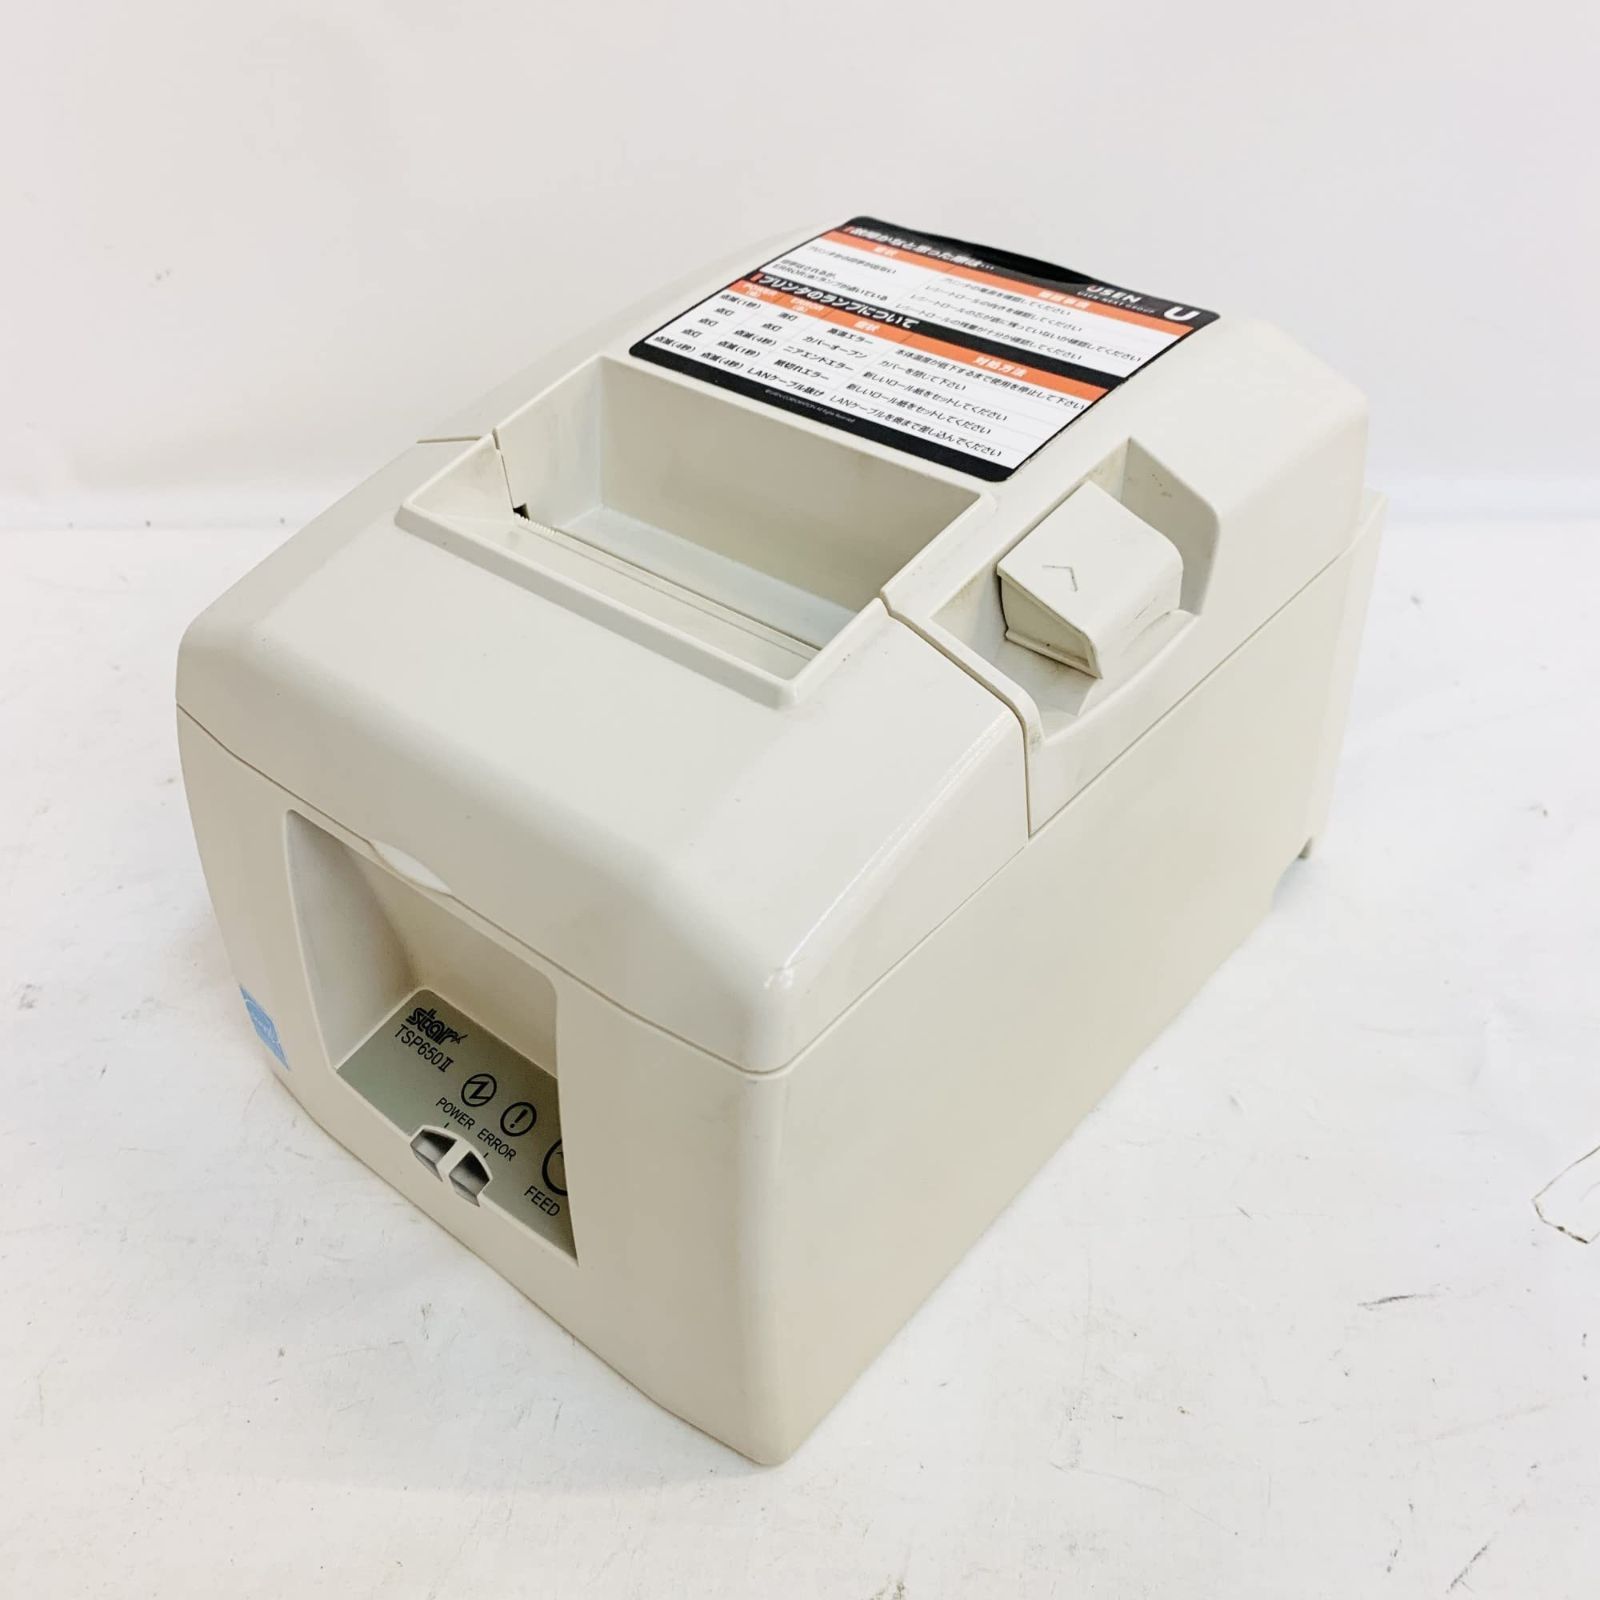 Airレジ対応 レシートプリンター TSP650 - 事務/店舗用品